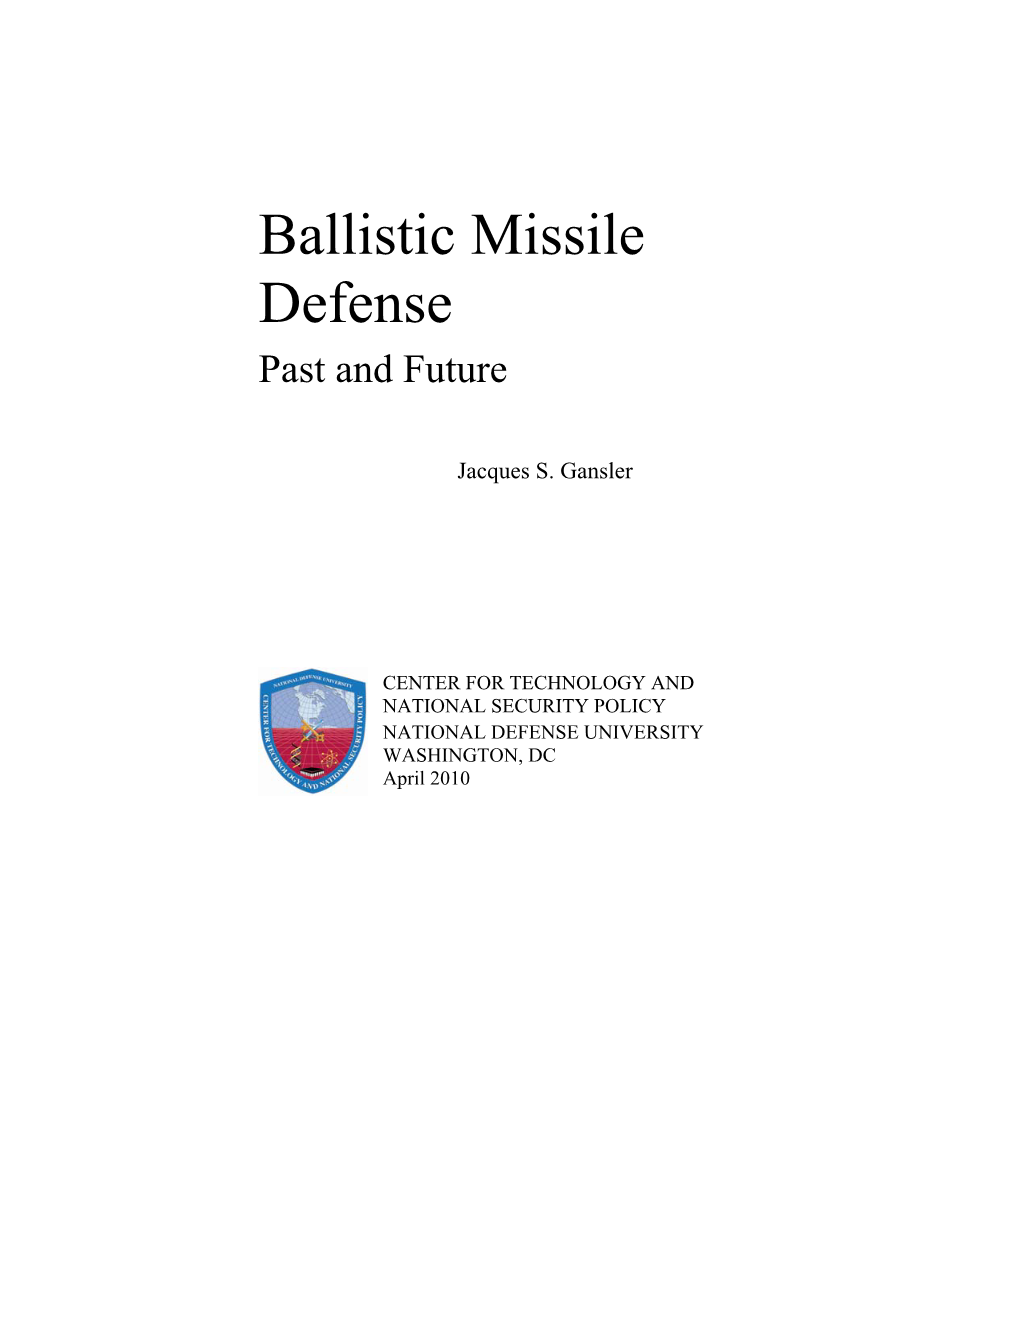 Ballistic Missile Defense Past and Future